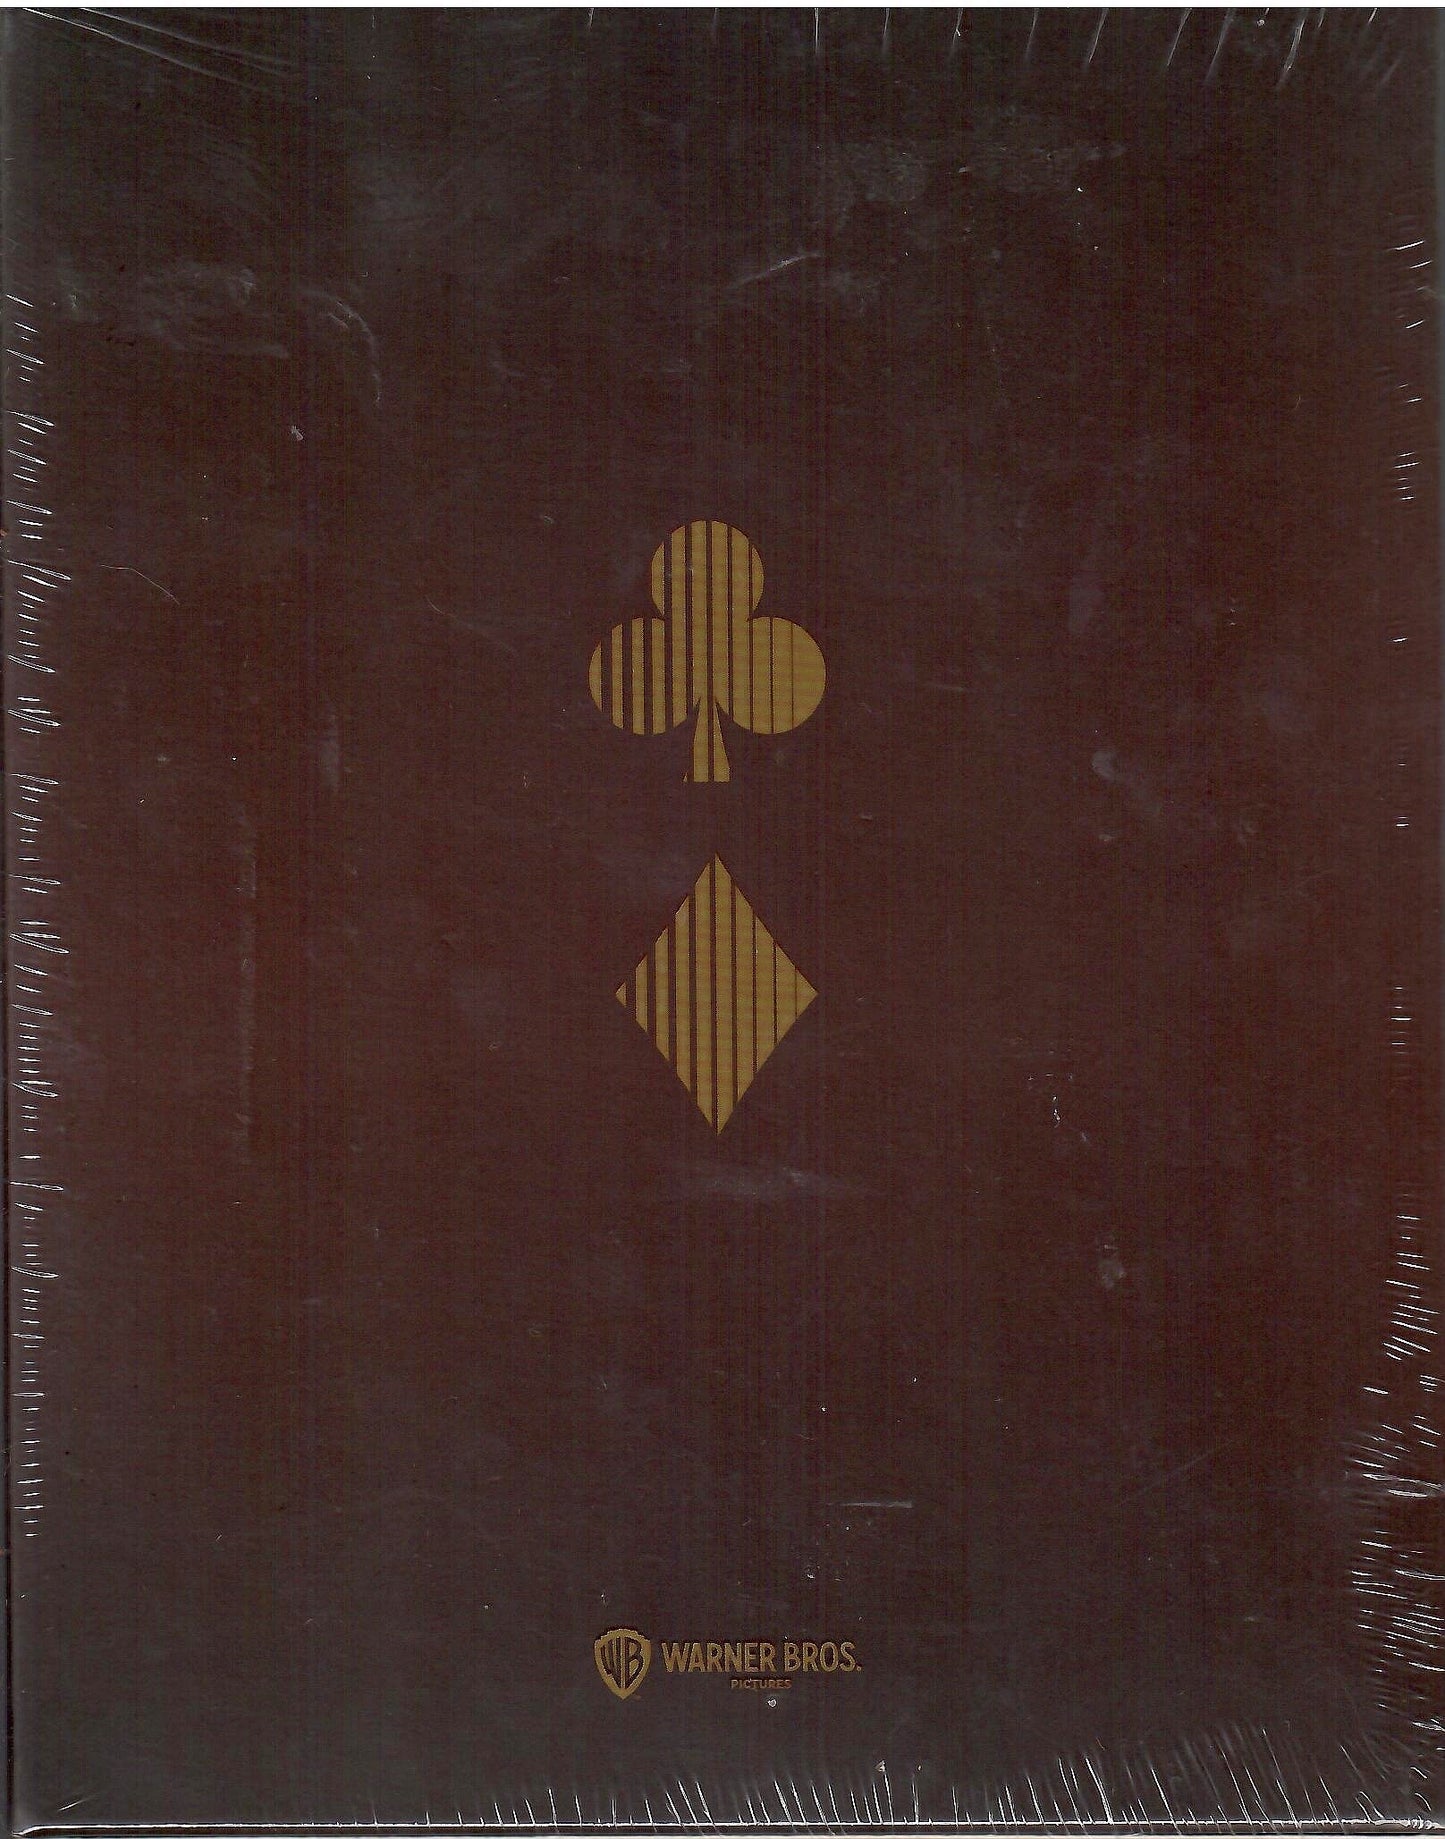 The Prestige 4K Lenticular SteelBook (Blufans #49)(China)